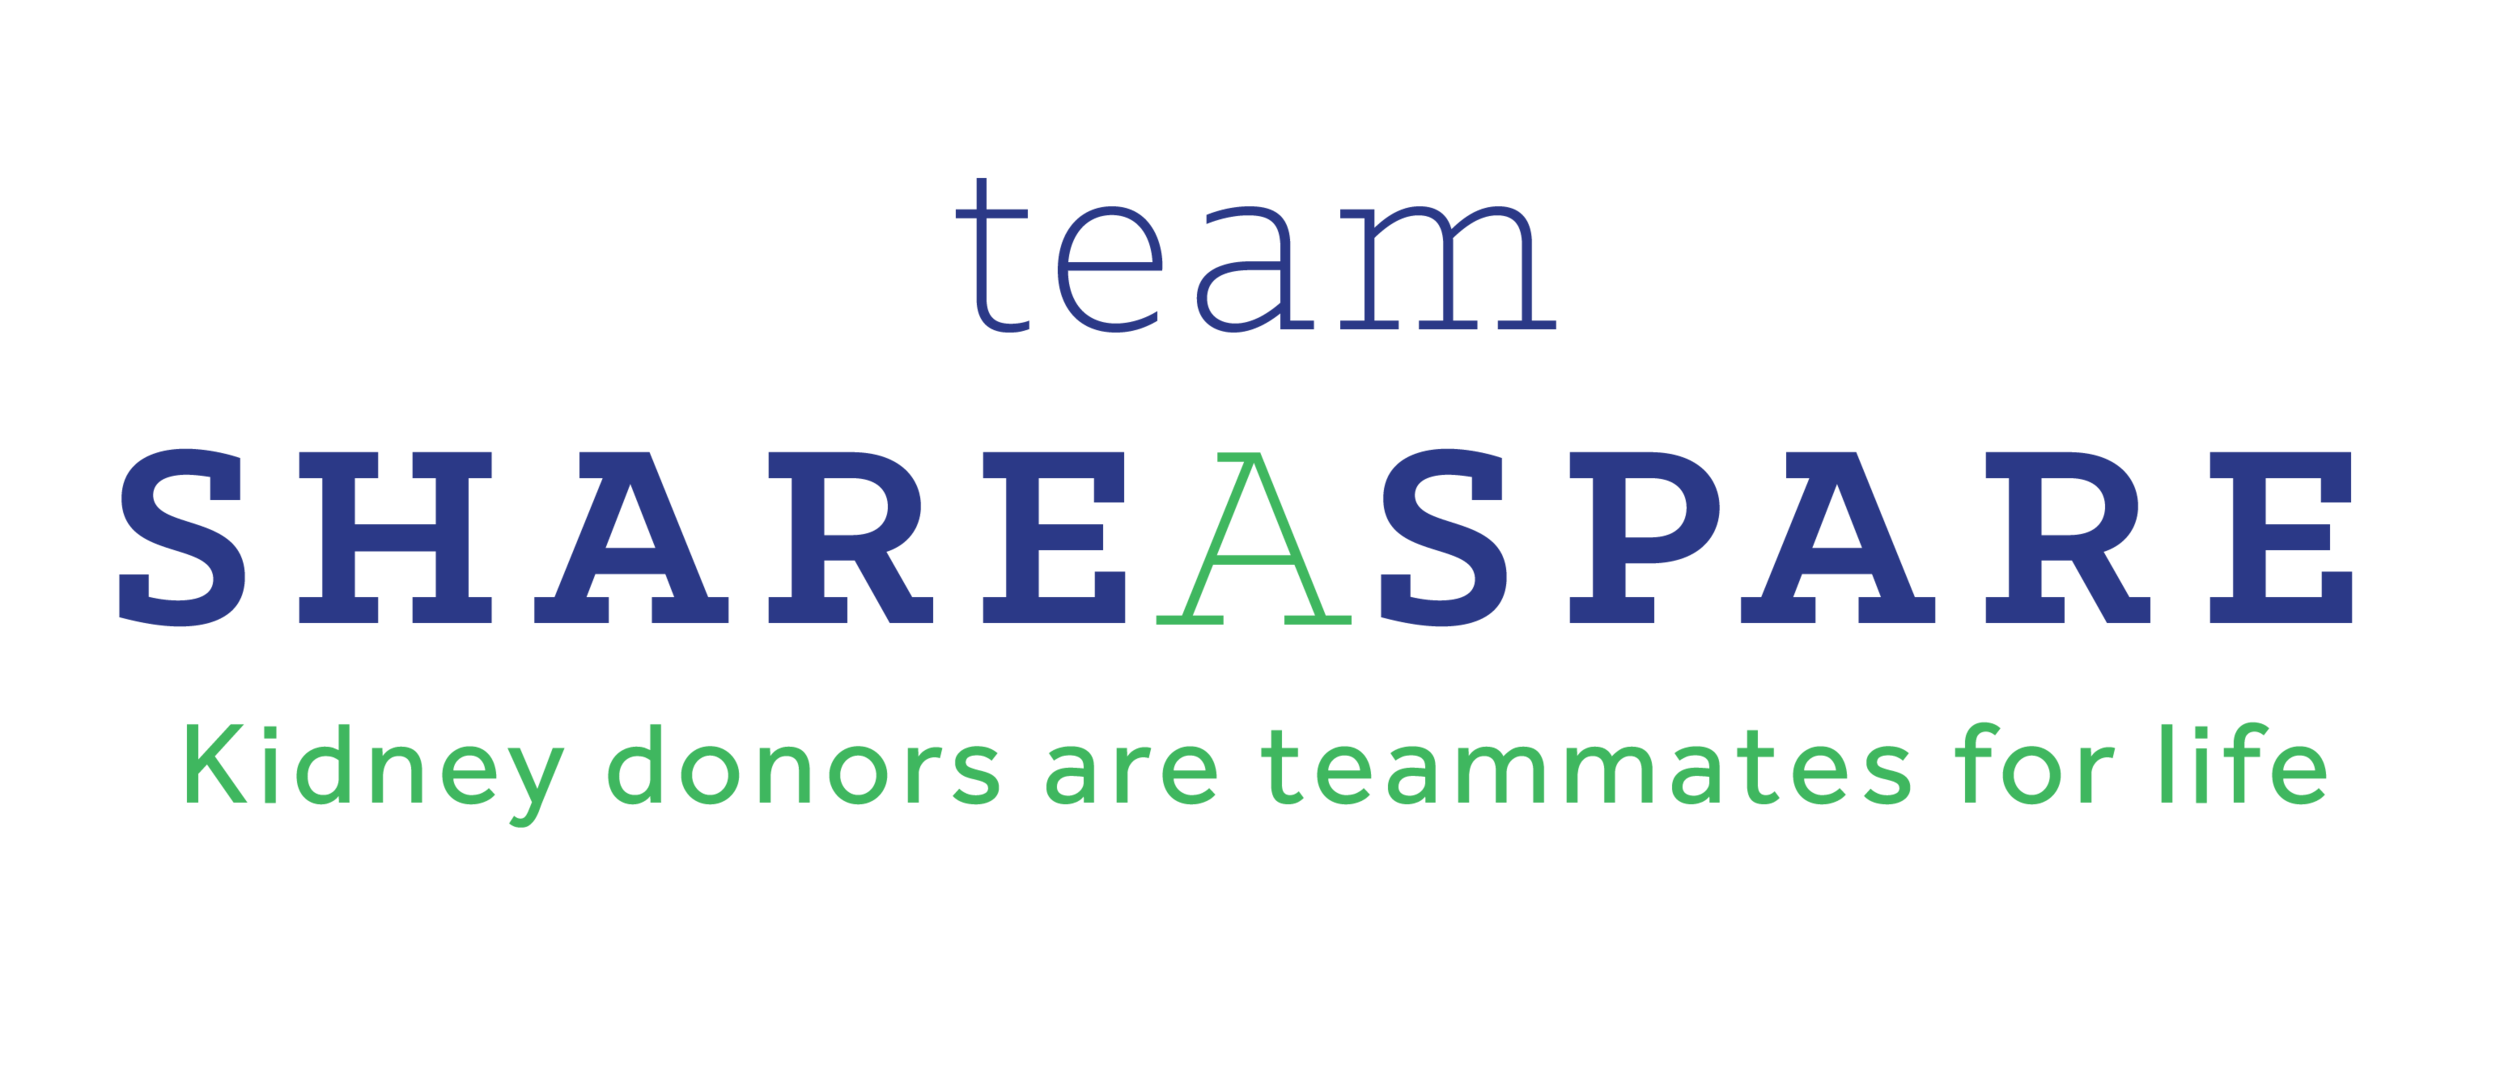 Team Share a Spare